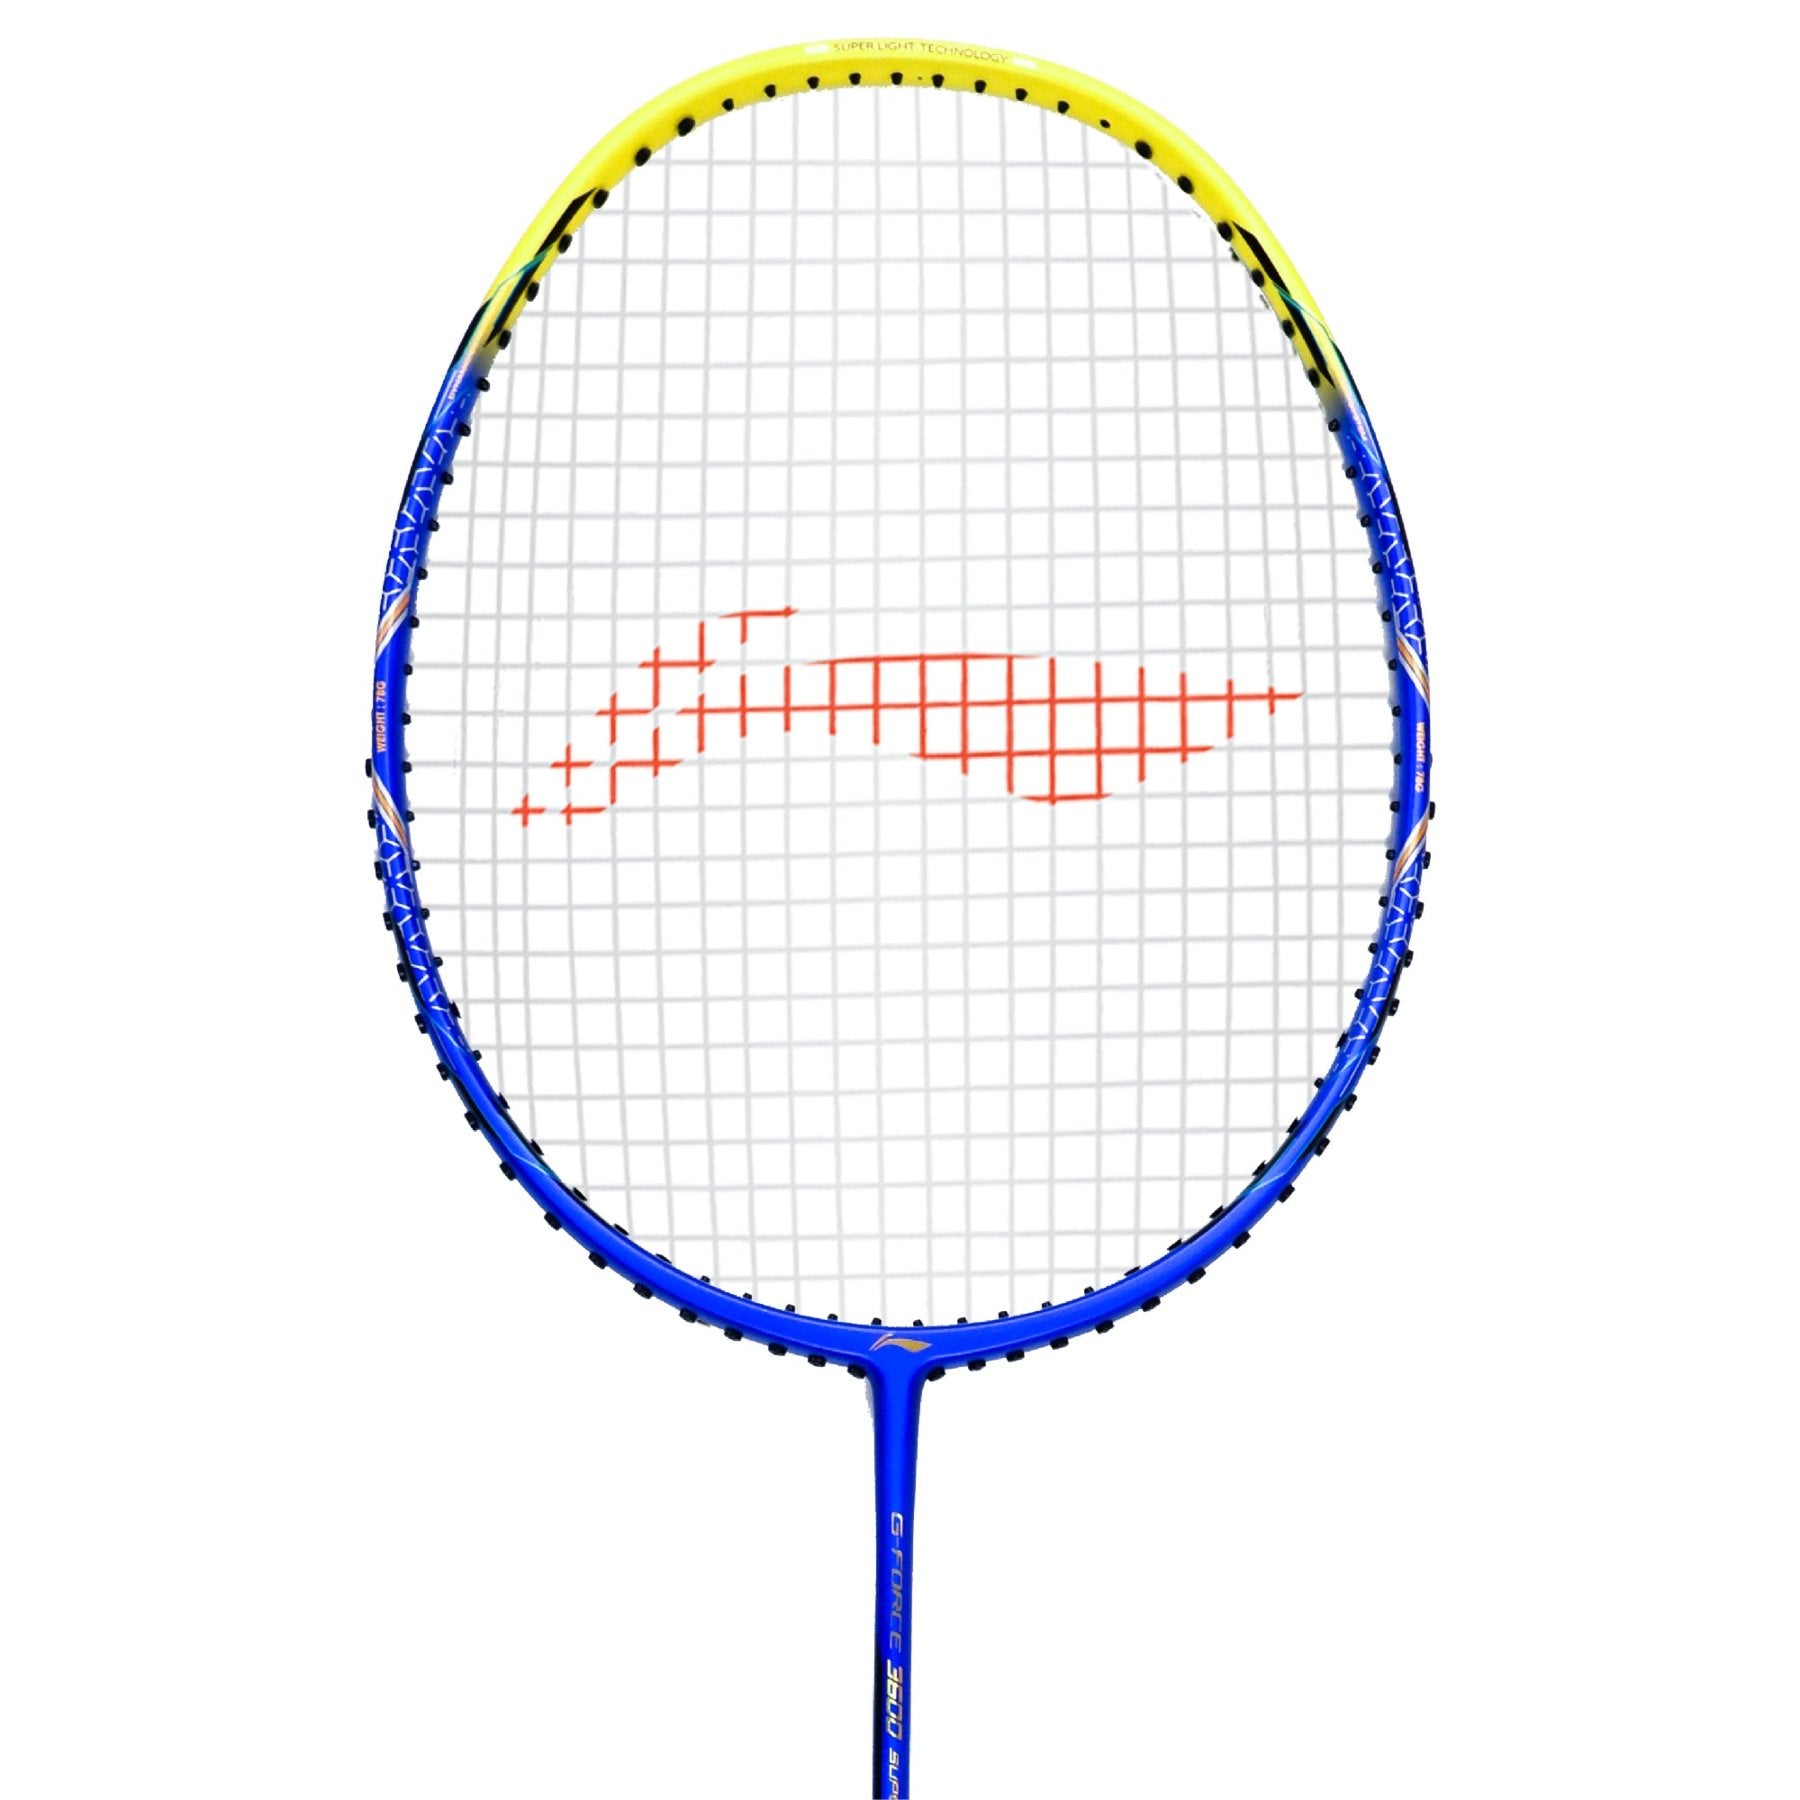 Li-Ning G-Force 3600 Superlite Strung Badminton Racquet (Blue/Yellow)